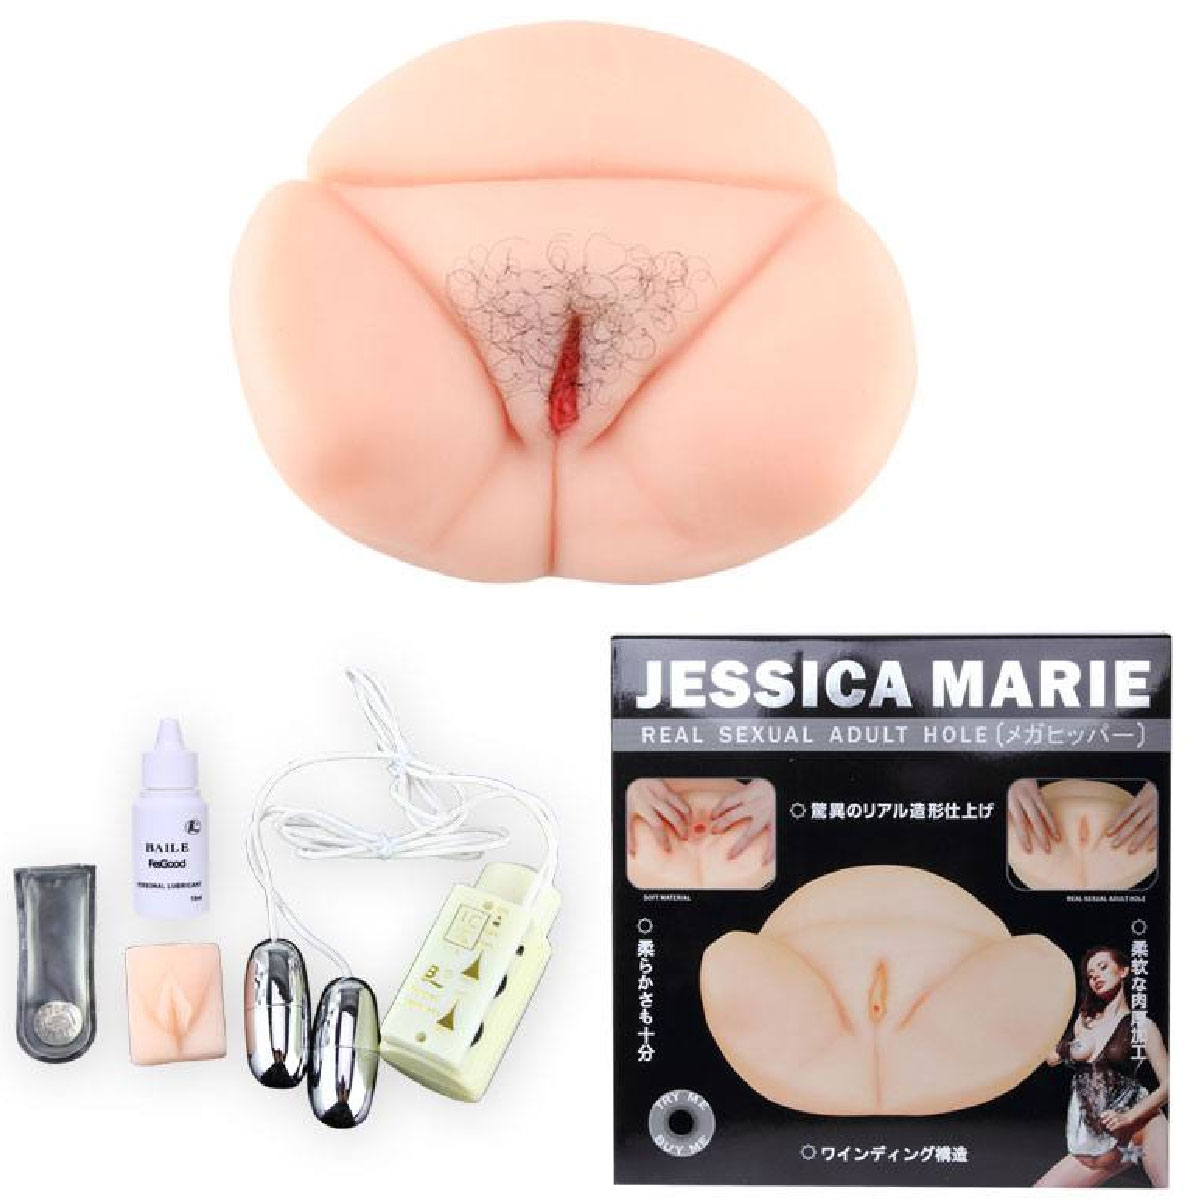 Tombul Ünlü Jessica Marie Yapay Vajinası L-9112